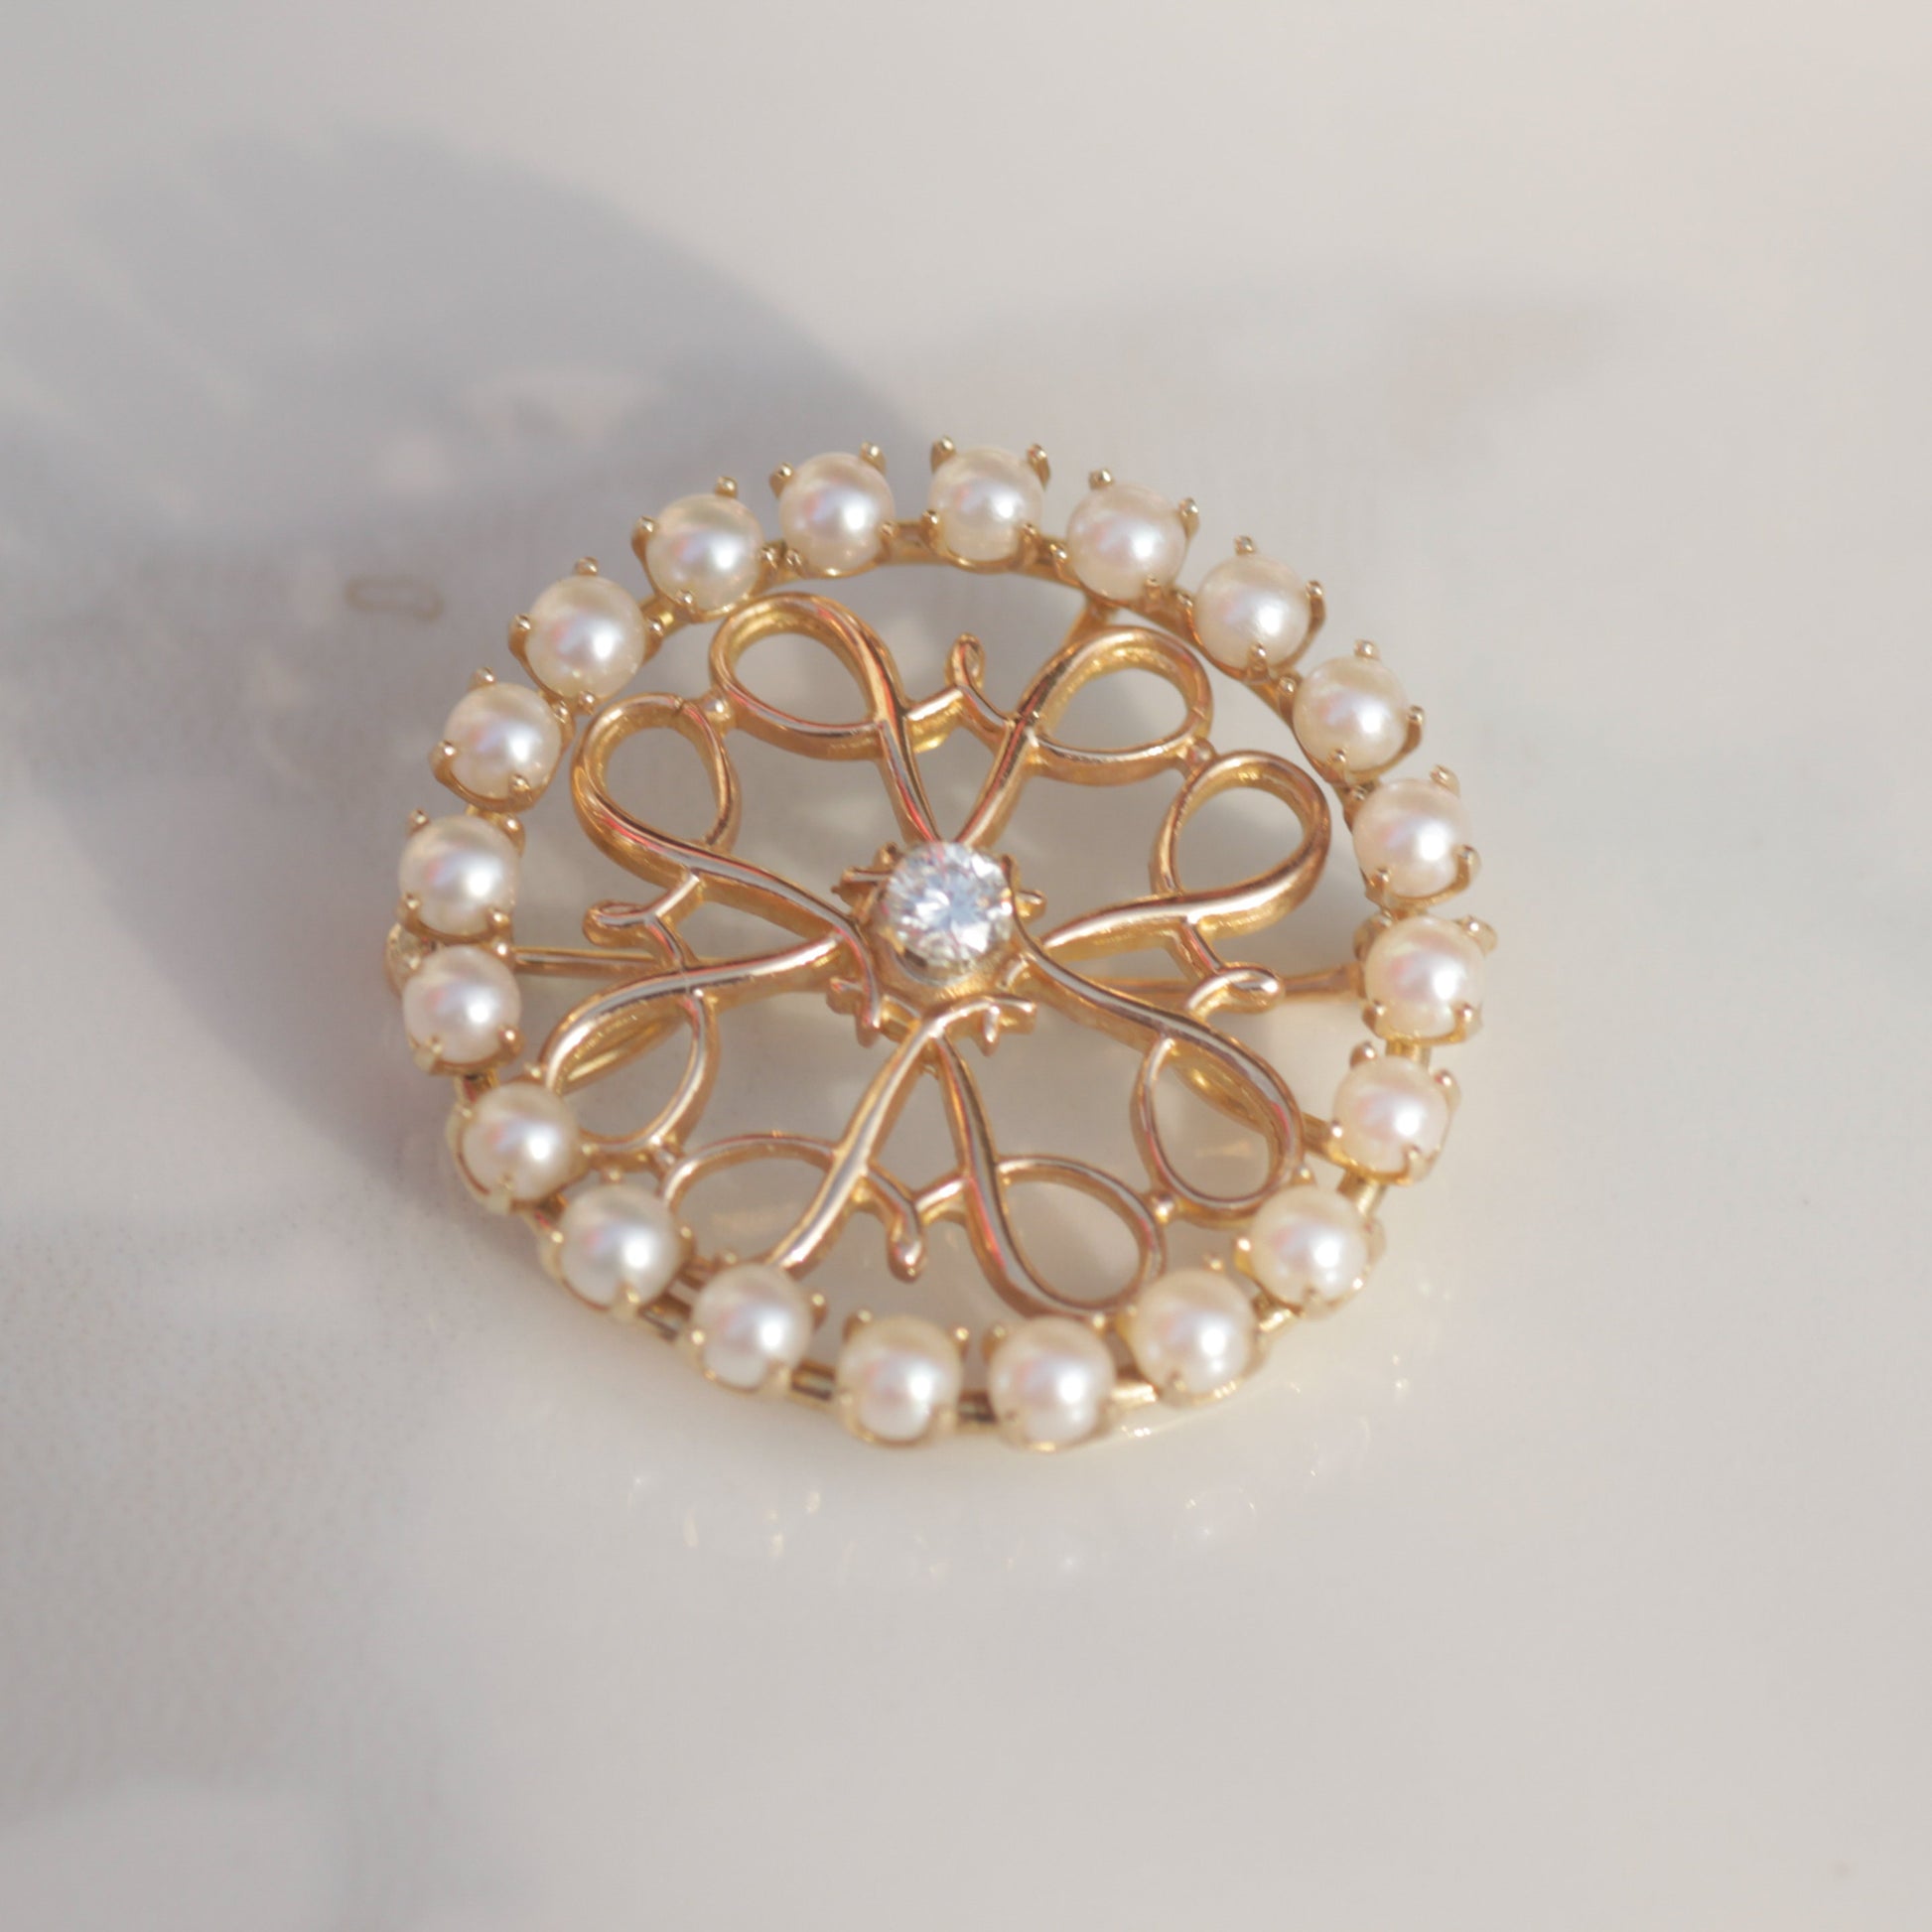 Vintage Diamond and Seed Pearl Avon Brooch 14k Gold